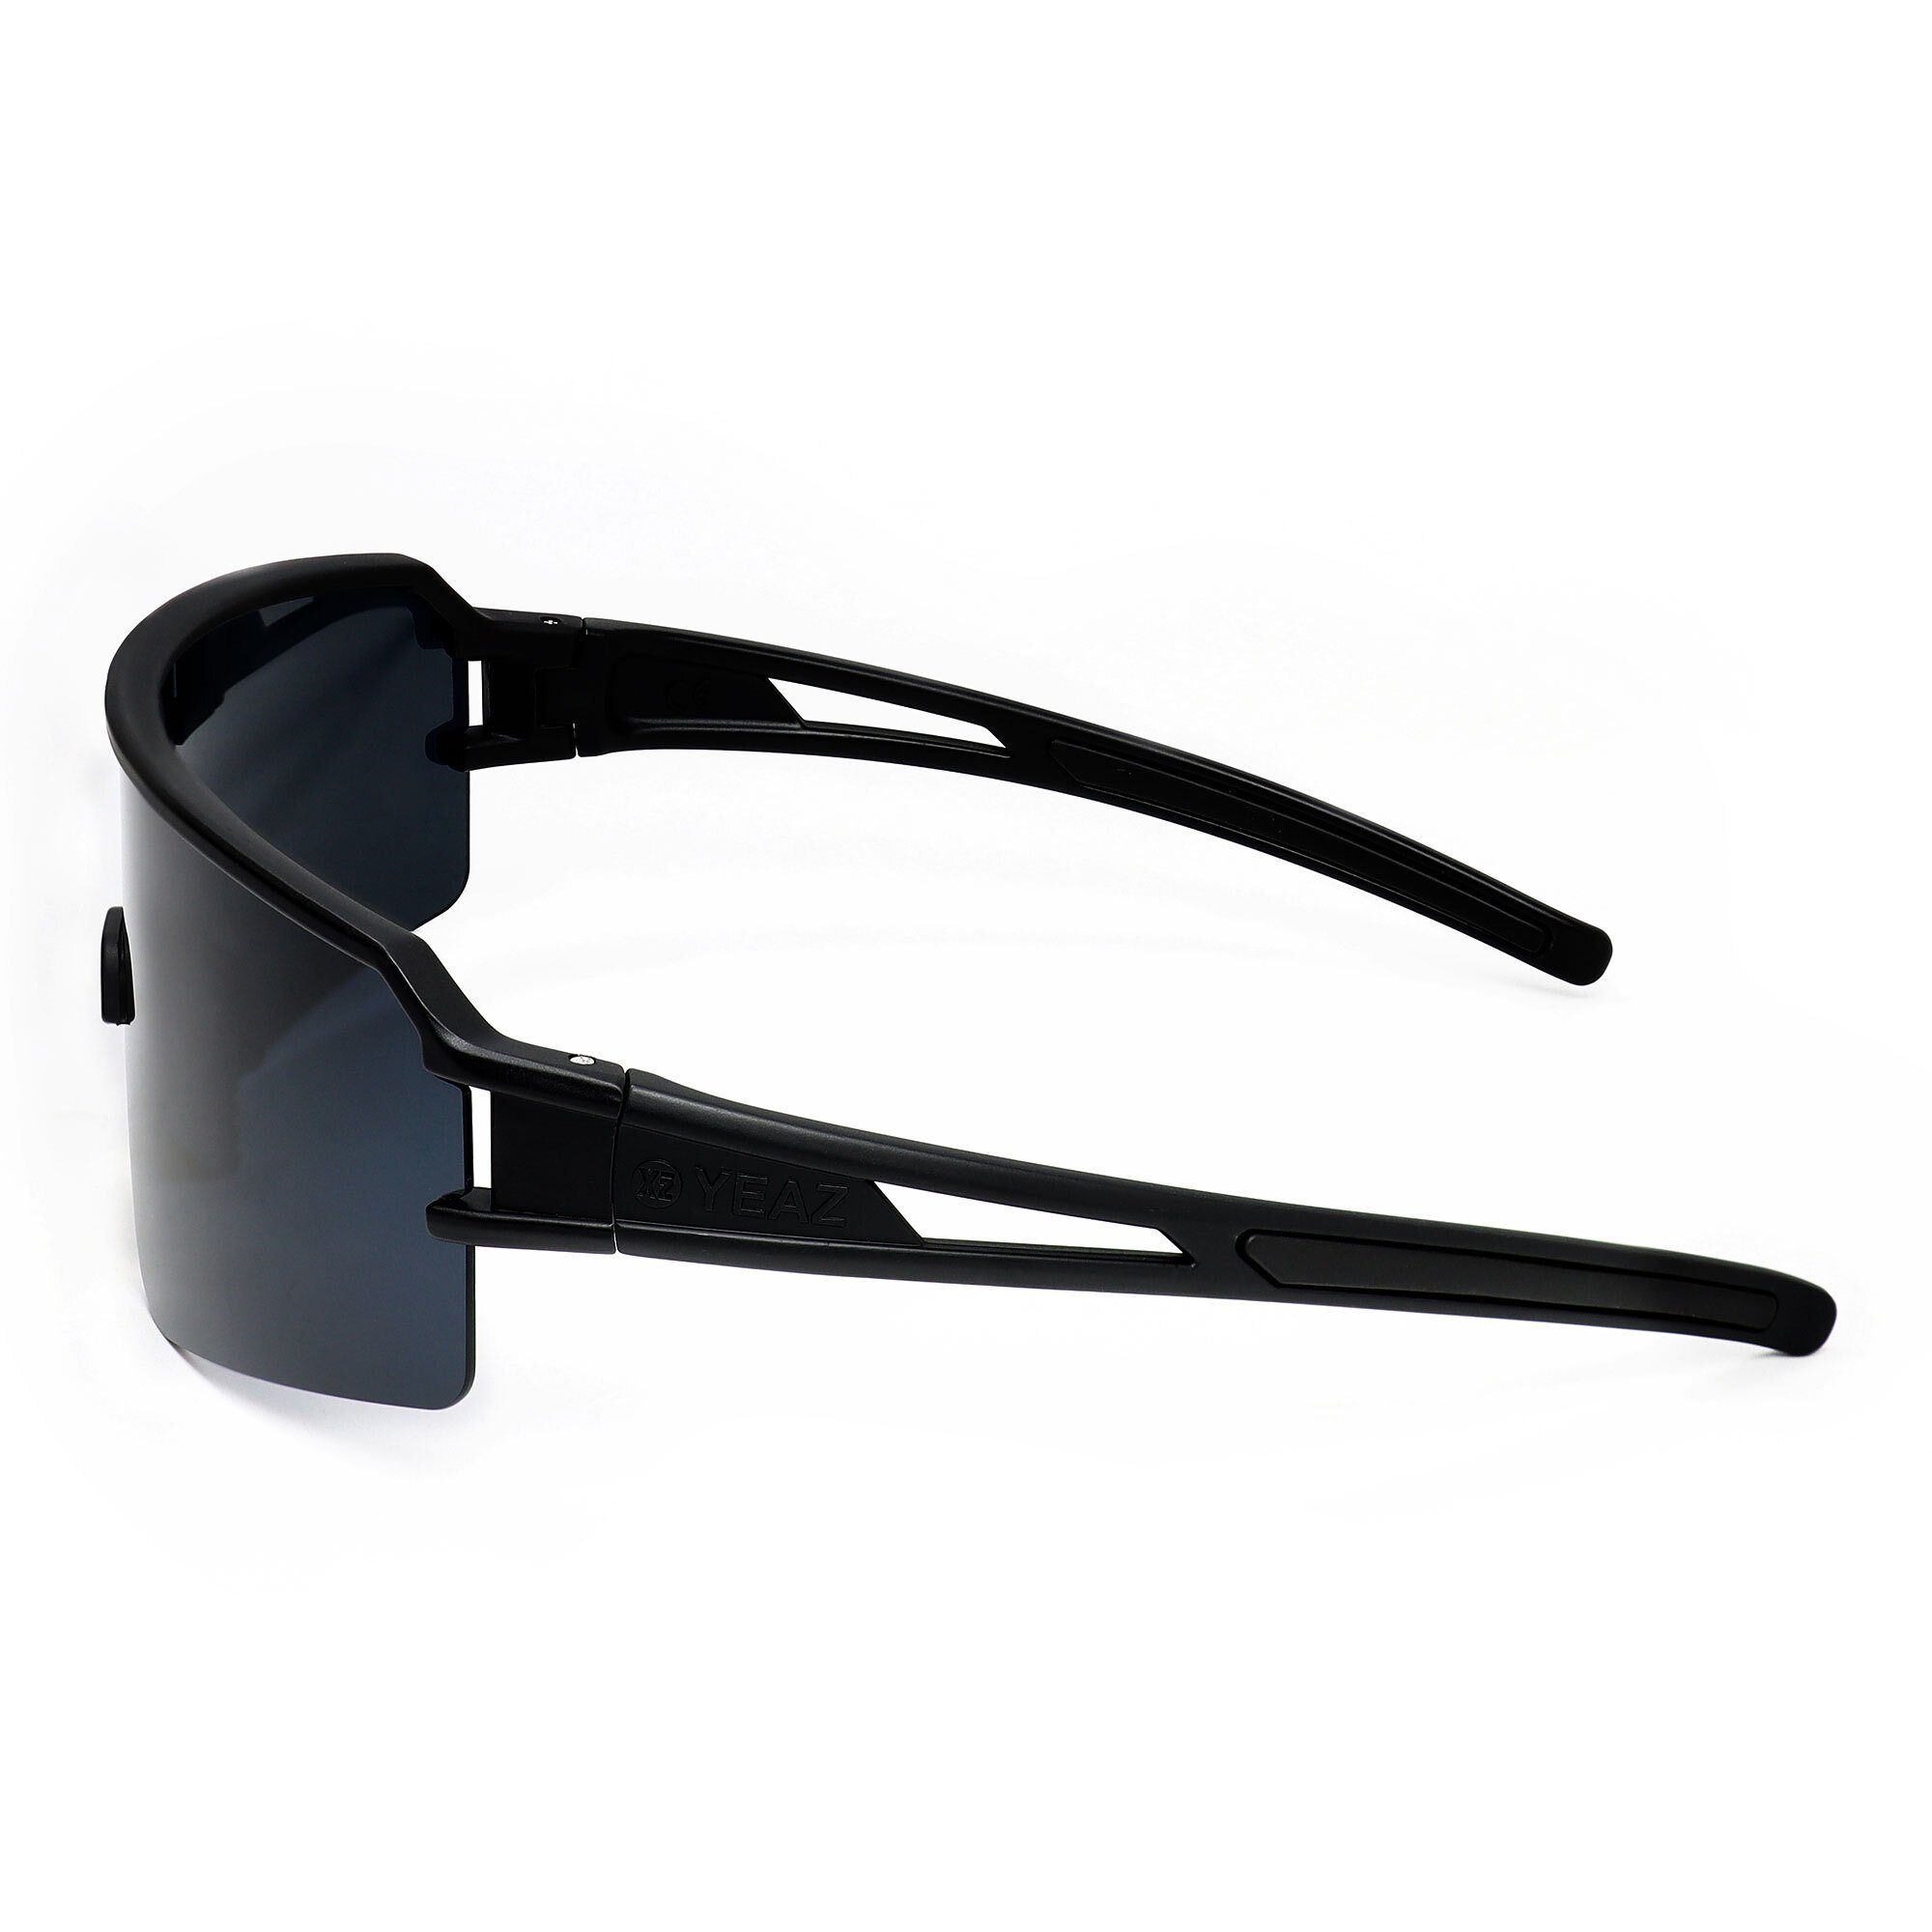 YEAZ Sportbrille SUNSPOT Sport-Sonnenbrille schwarz schwarz / weiß/transparent, sport-sonnenbrille